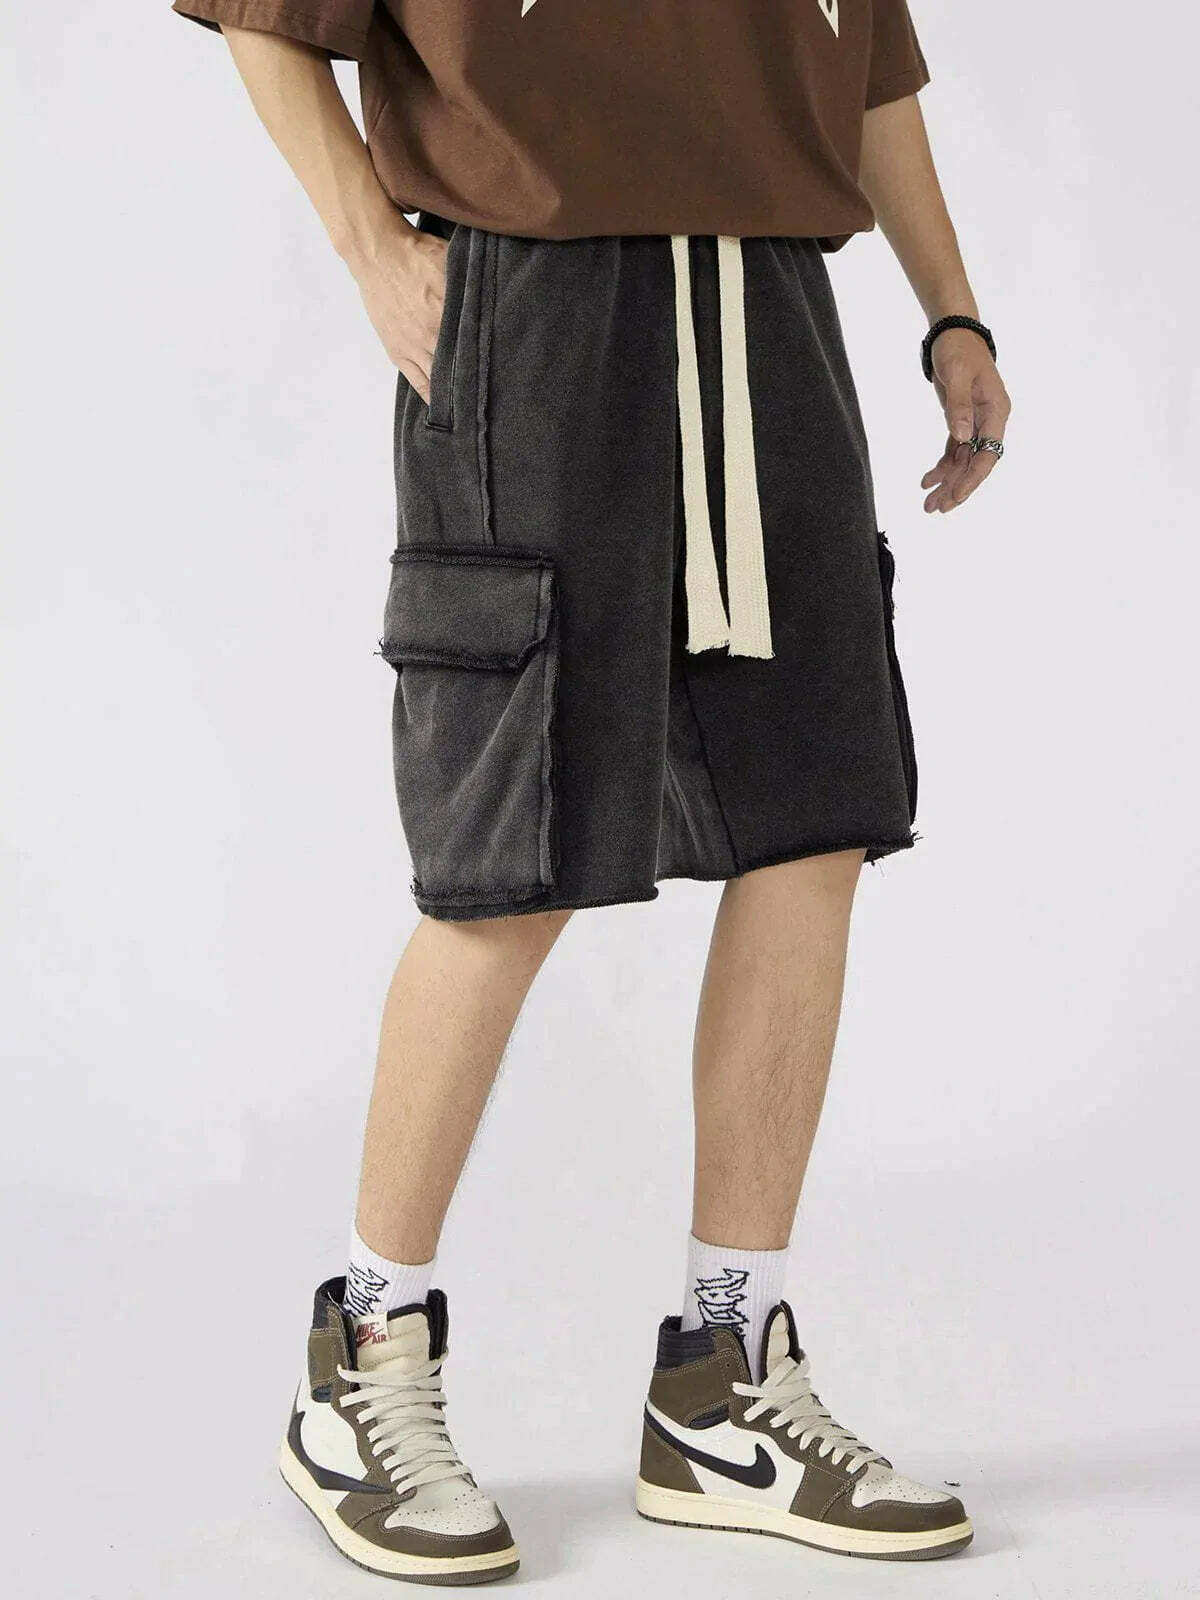 vintage denim shorts urban chic streetwear 4881